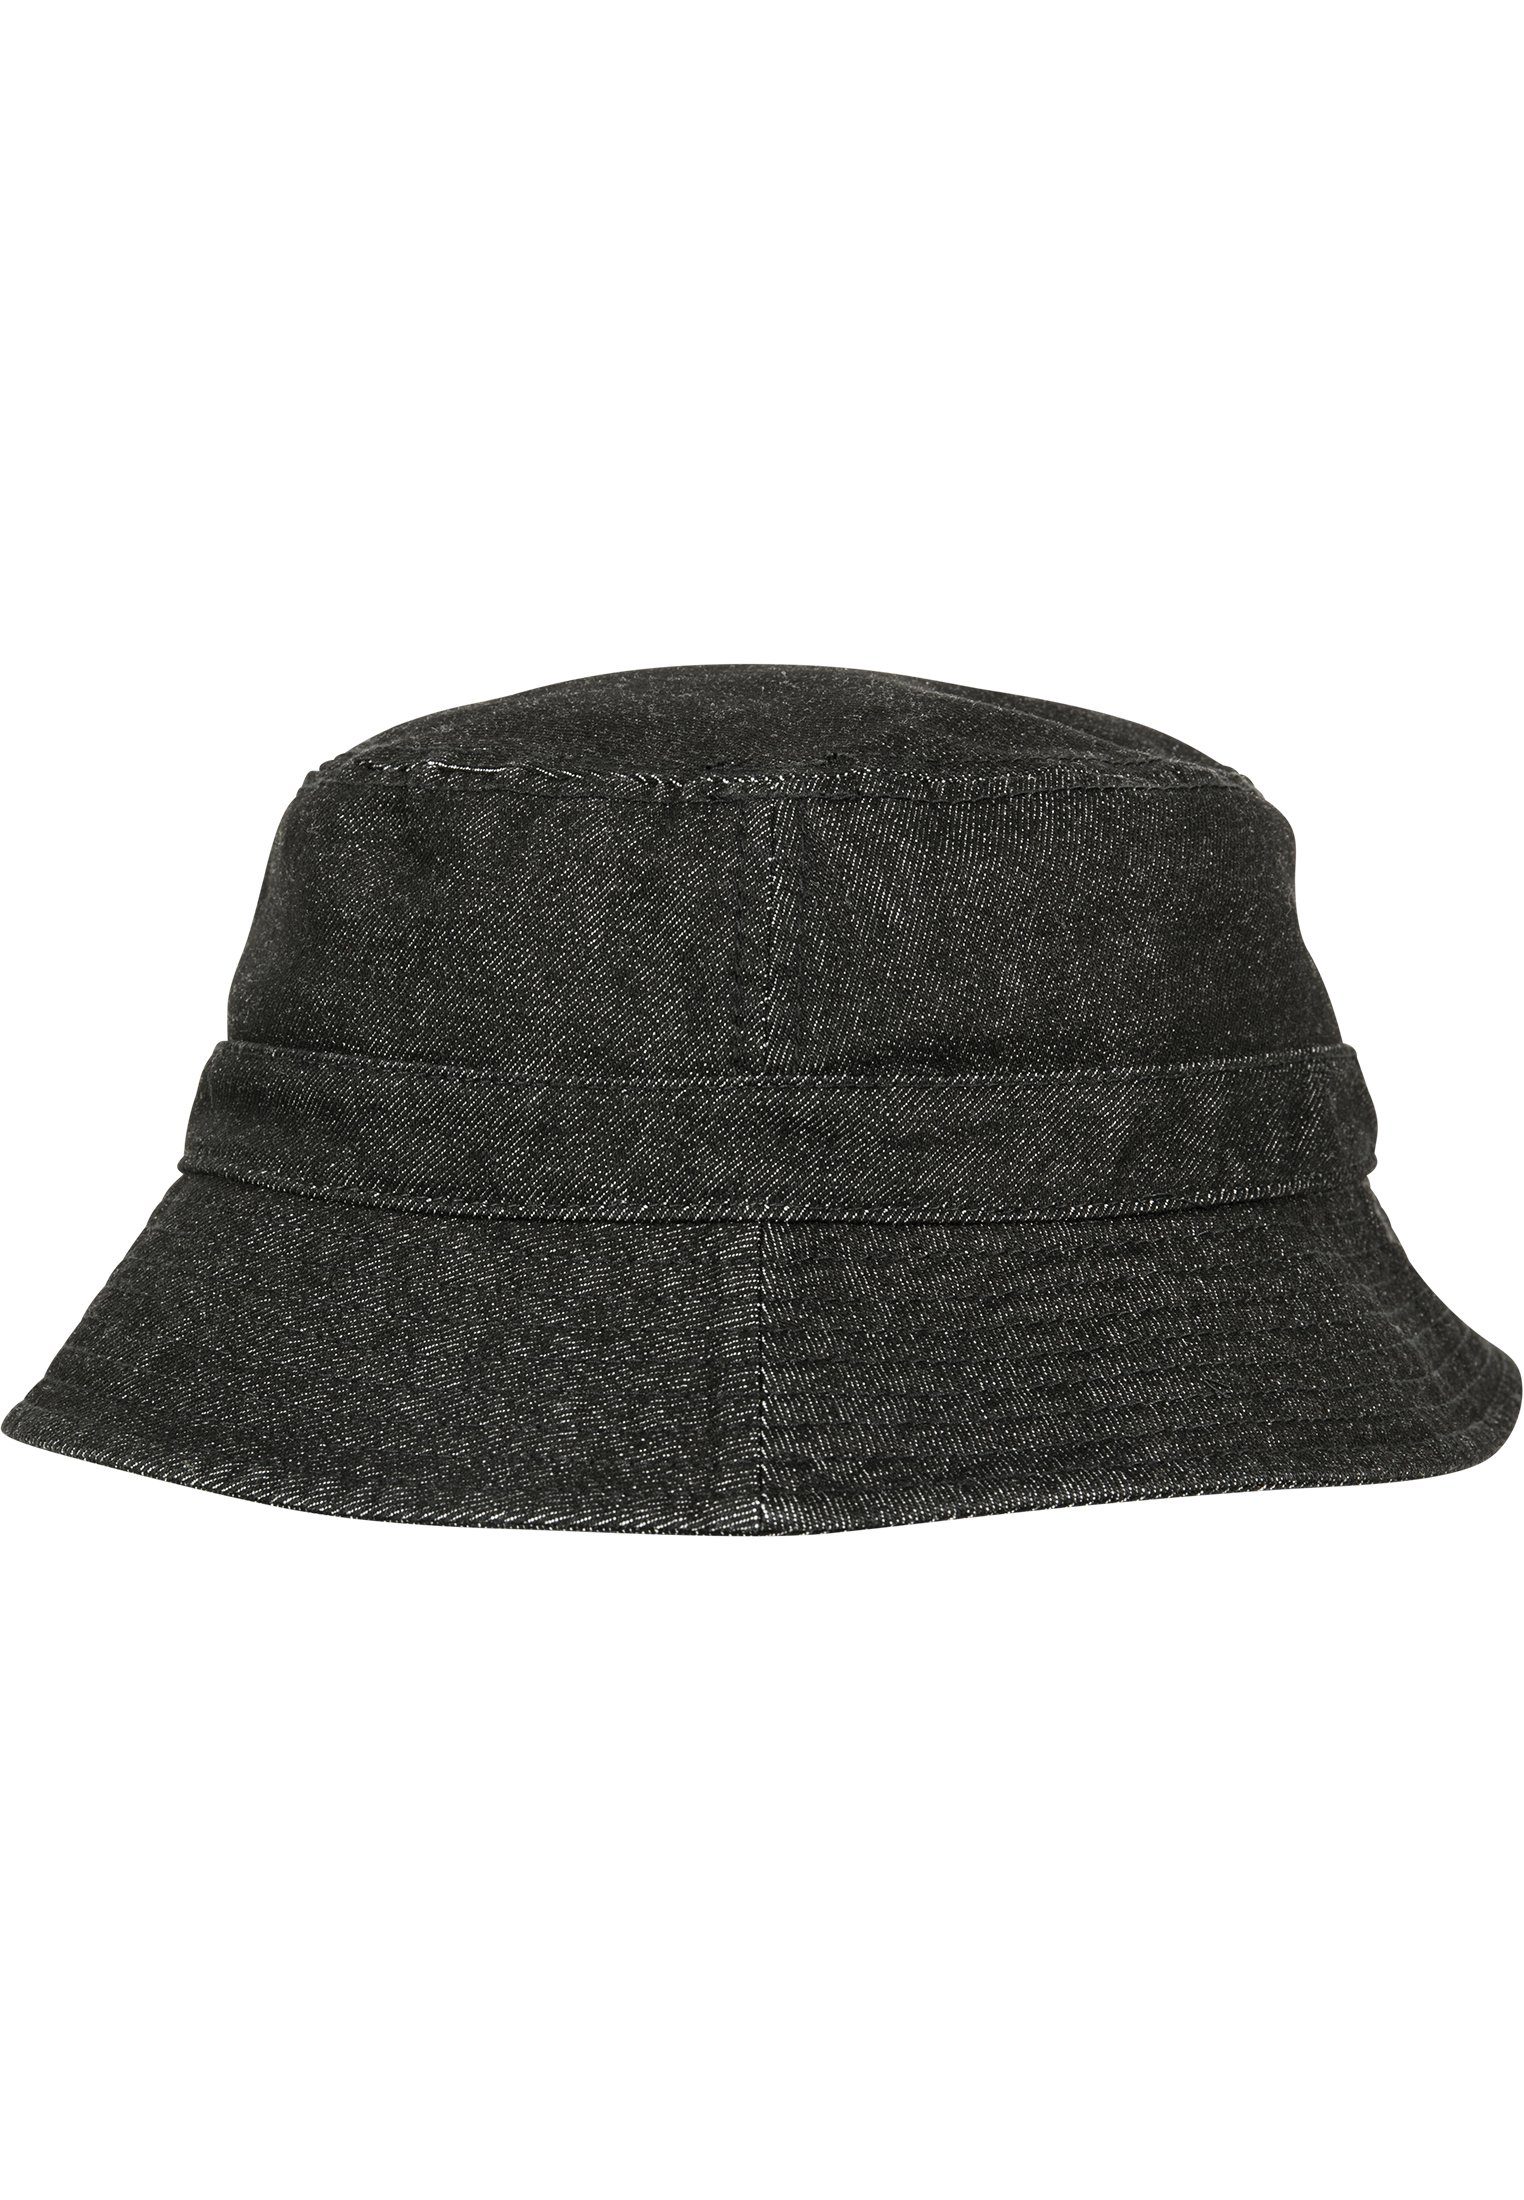 Bucket Hat Cap Hat black/grey Bucket Flexfit Denim Flex